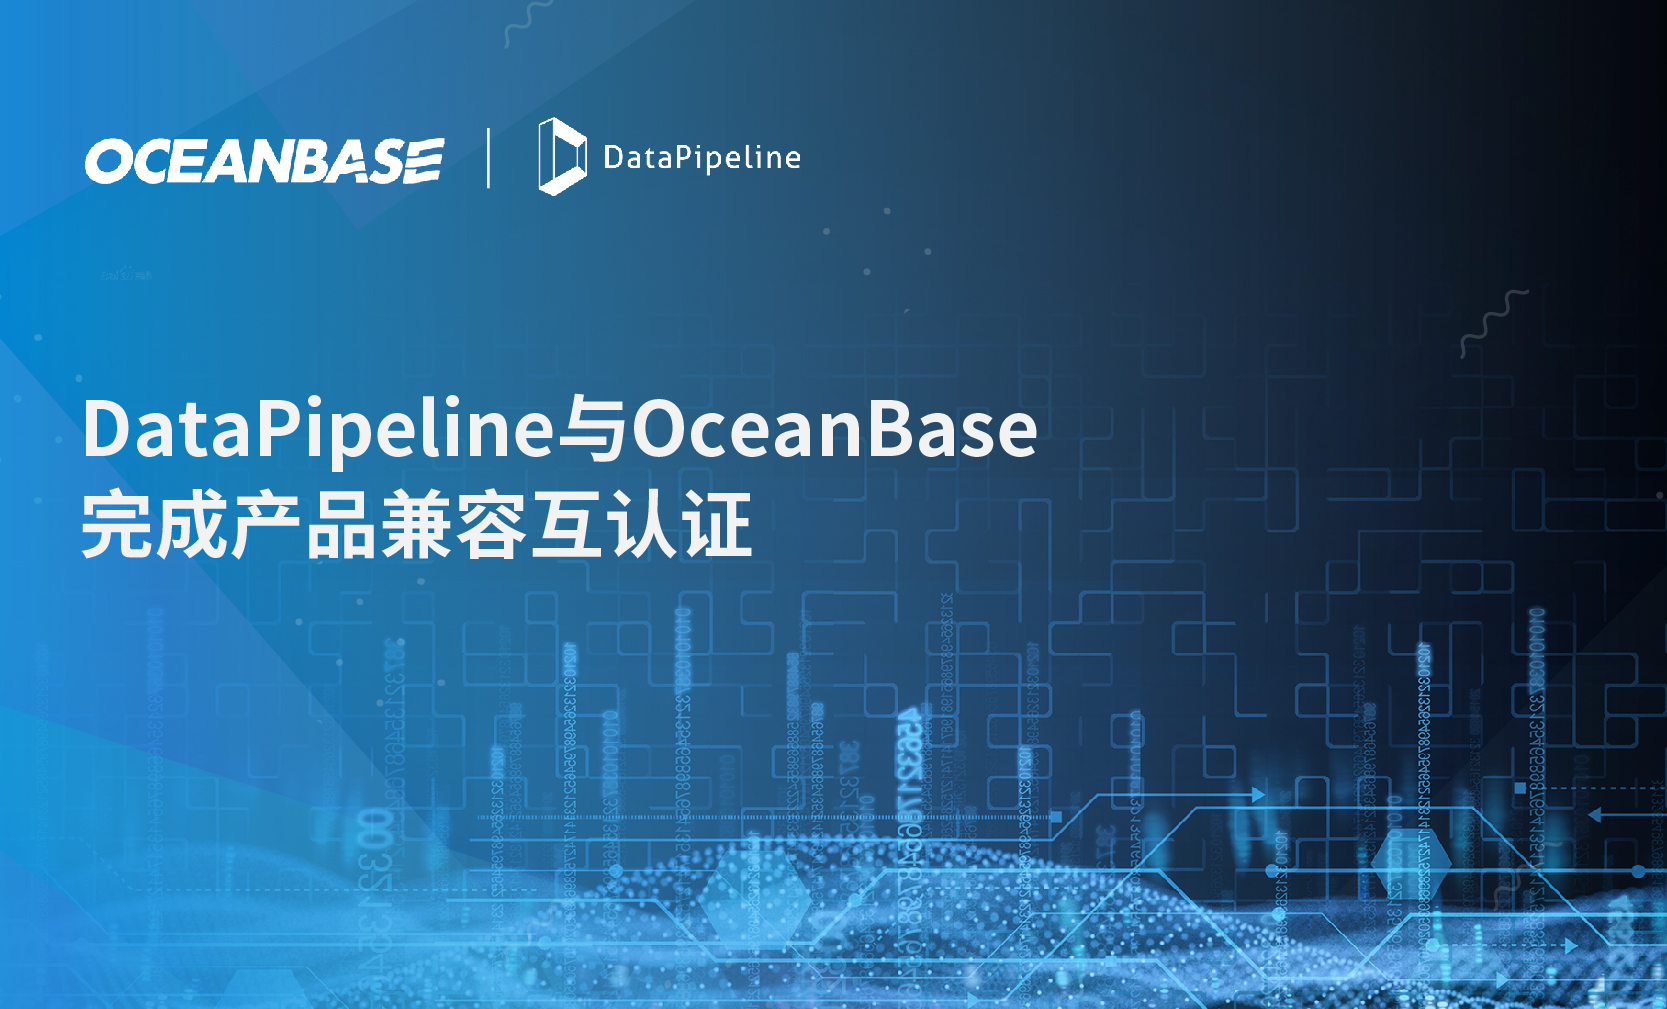 DataPipeline与OceanBase完成兼容性互认证，助力金融信息技术应用创新落地